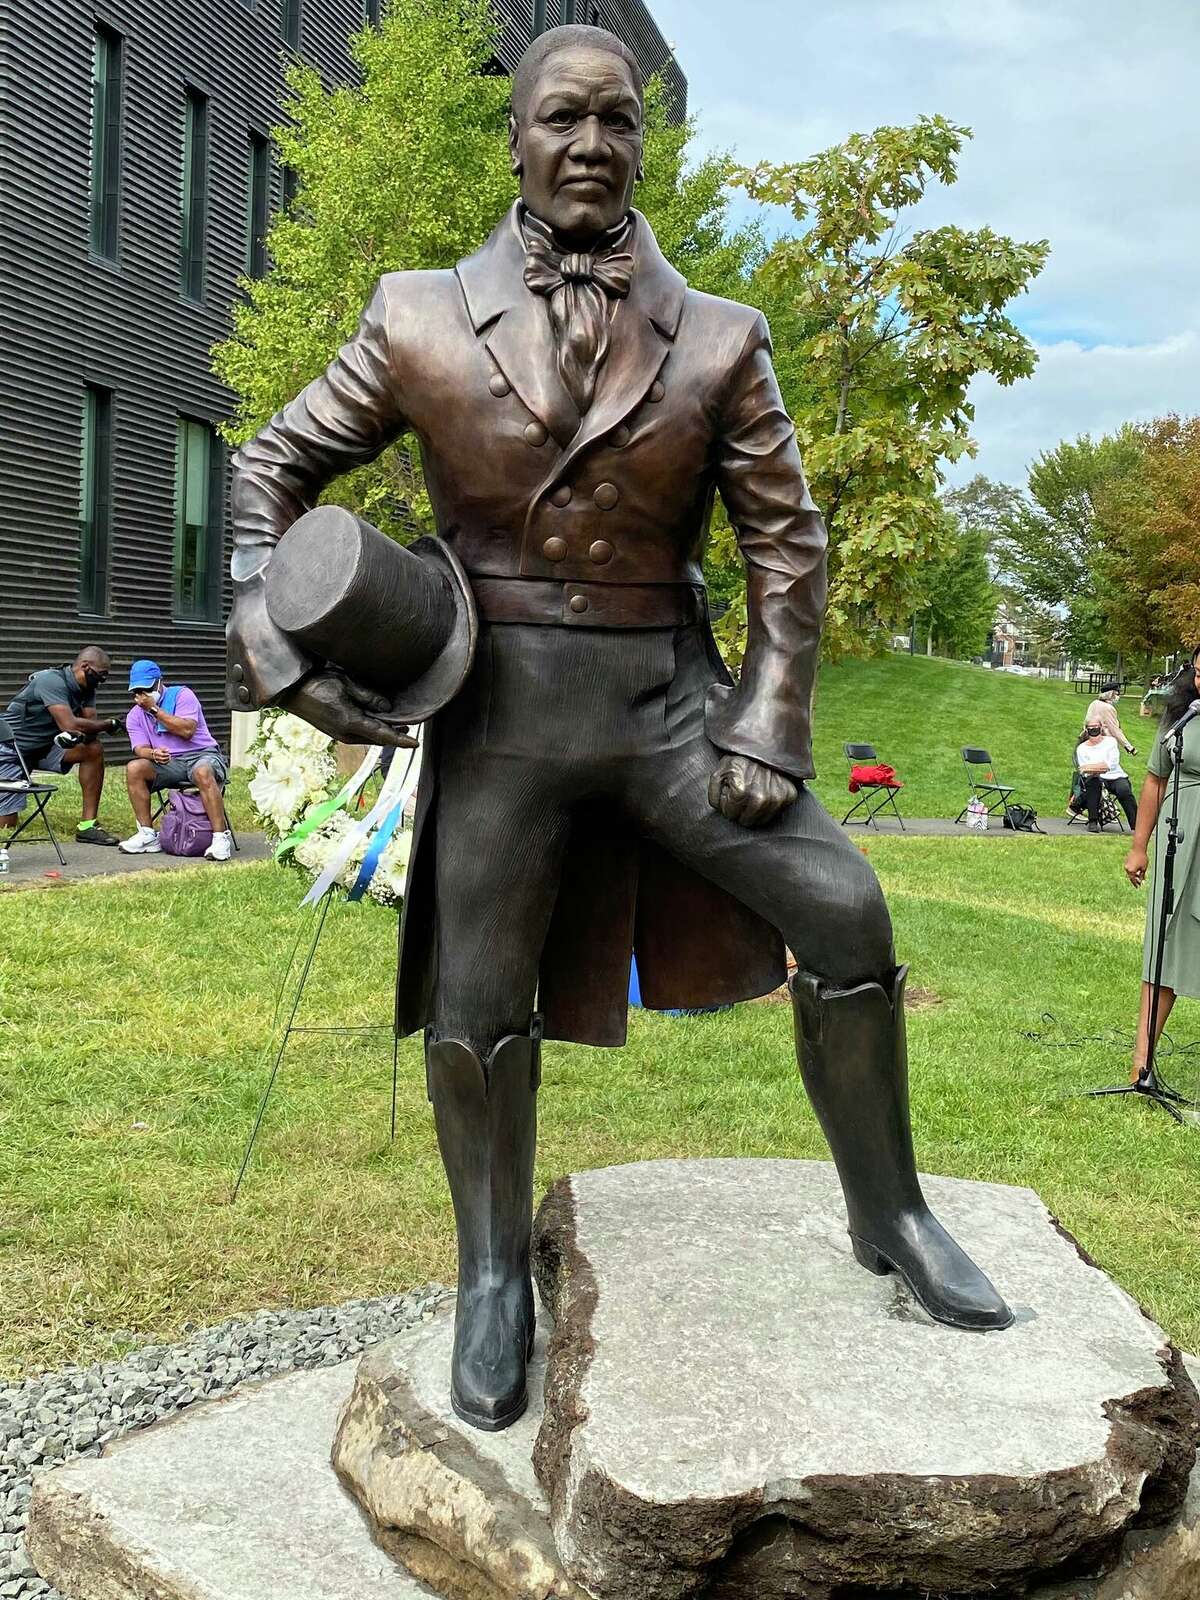 Statue of William Lanson, 19th century Black entrepreneur, was unveiled along Farmington Canal on Sept. 26, 2020